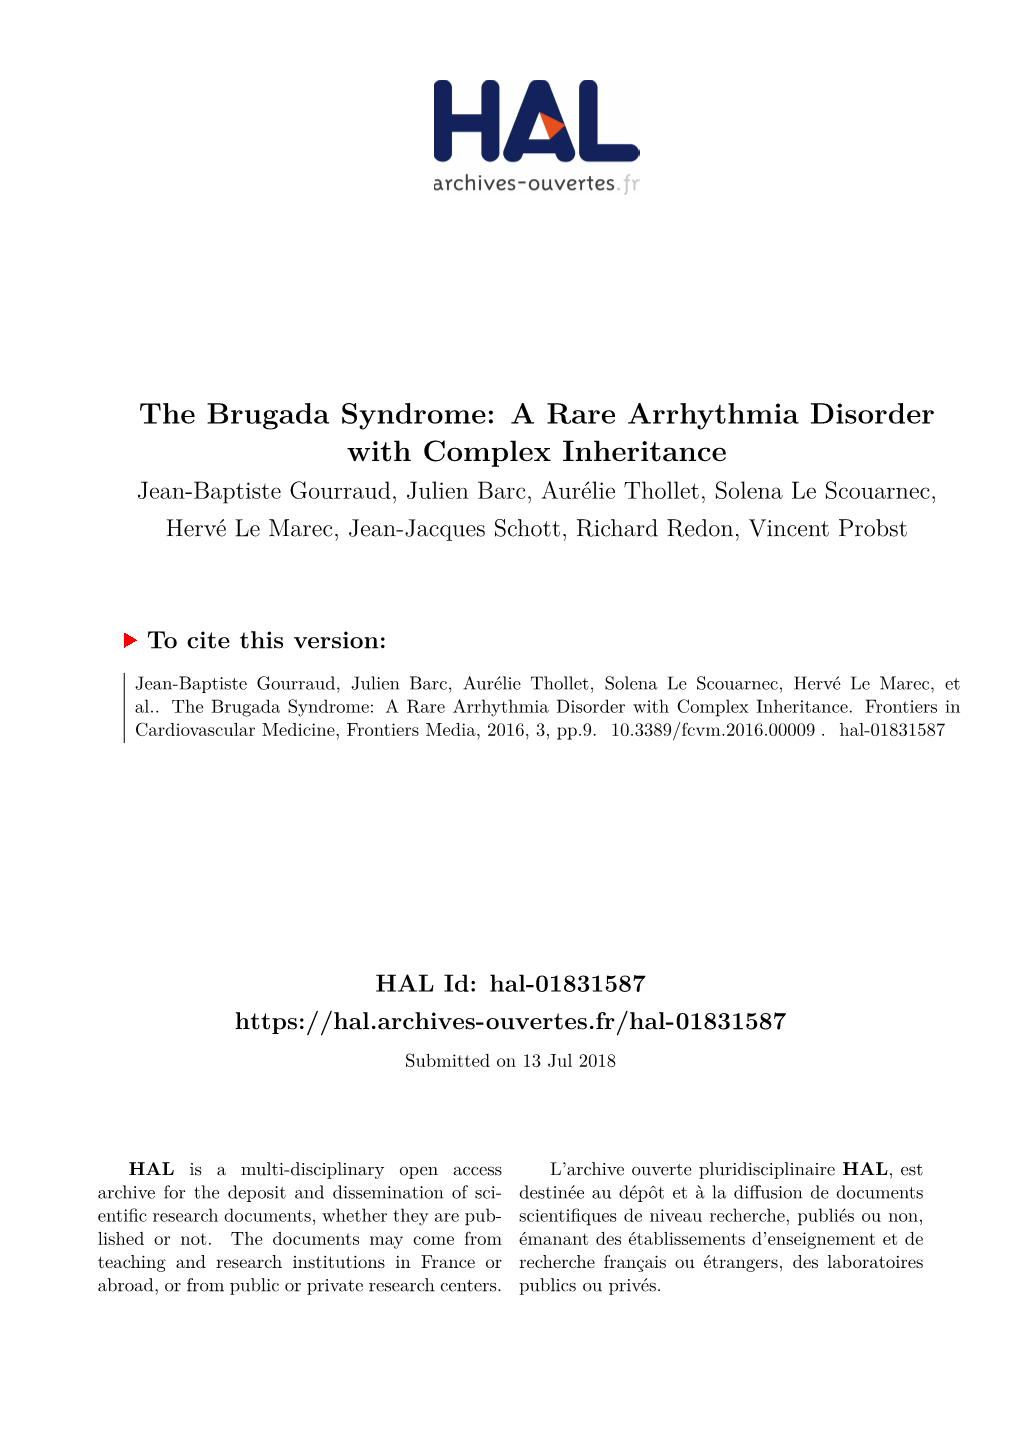 The Brugada Syndrome: a Rare Arrhythmia Disorder with Complex